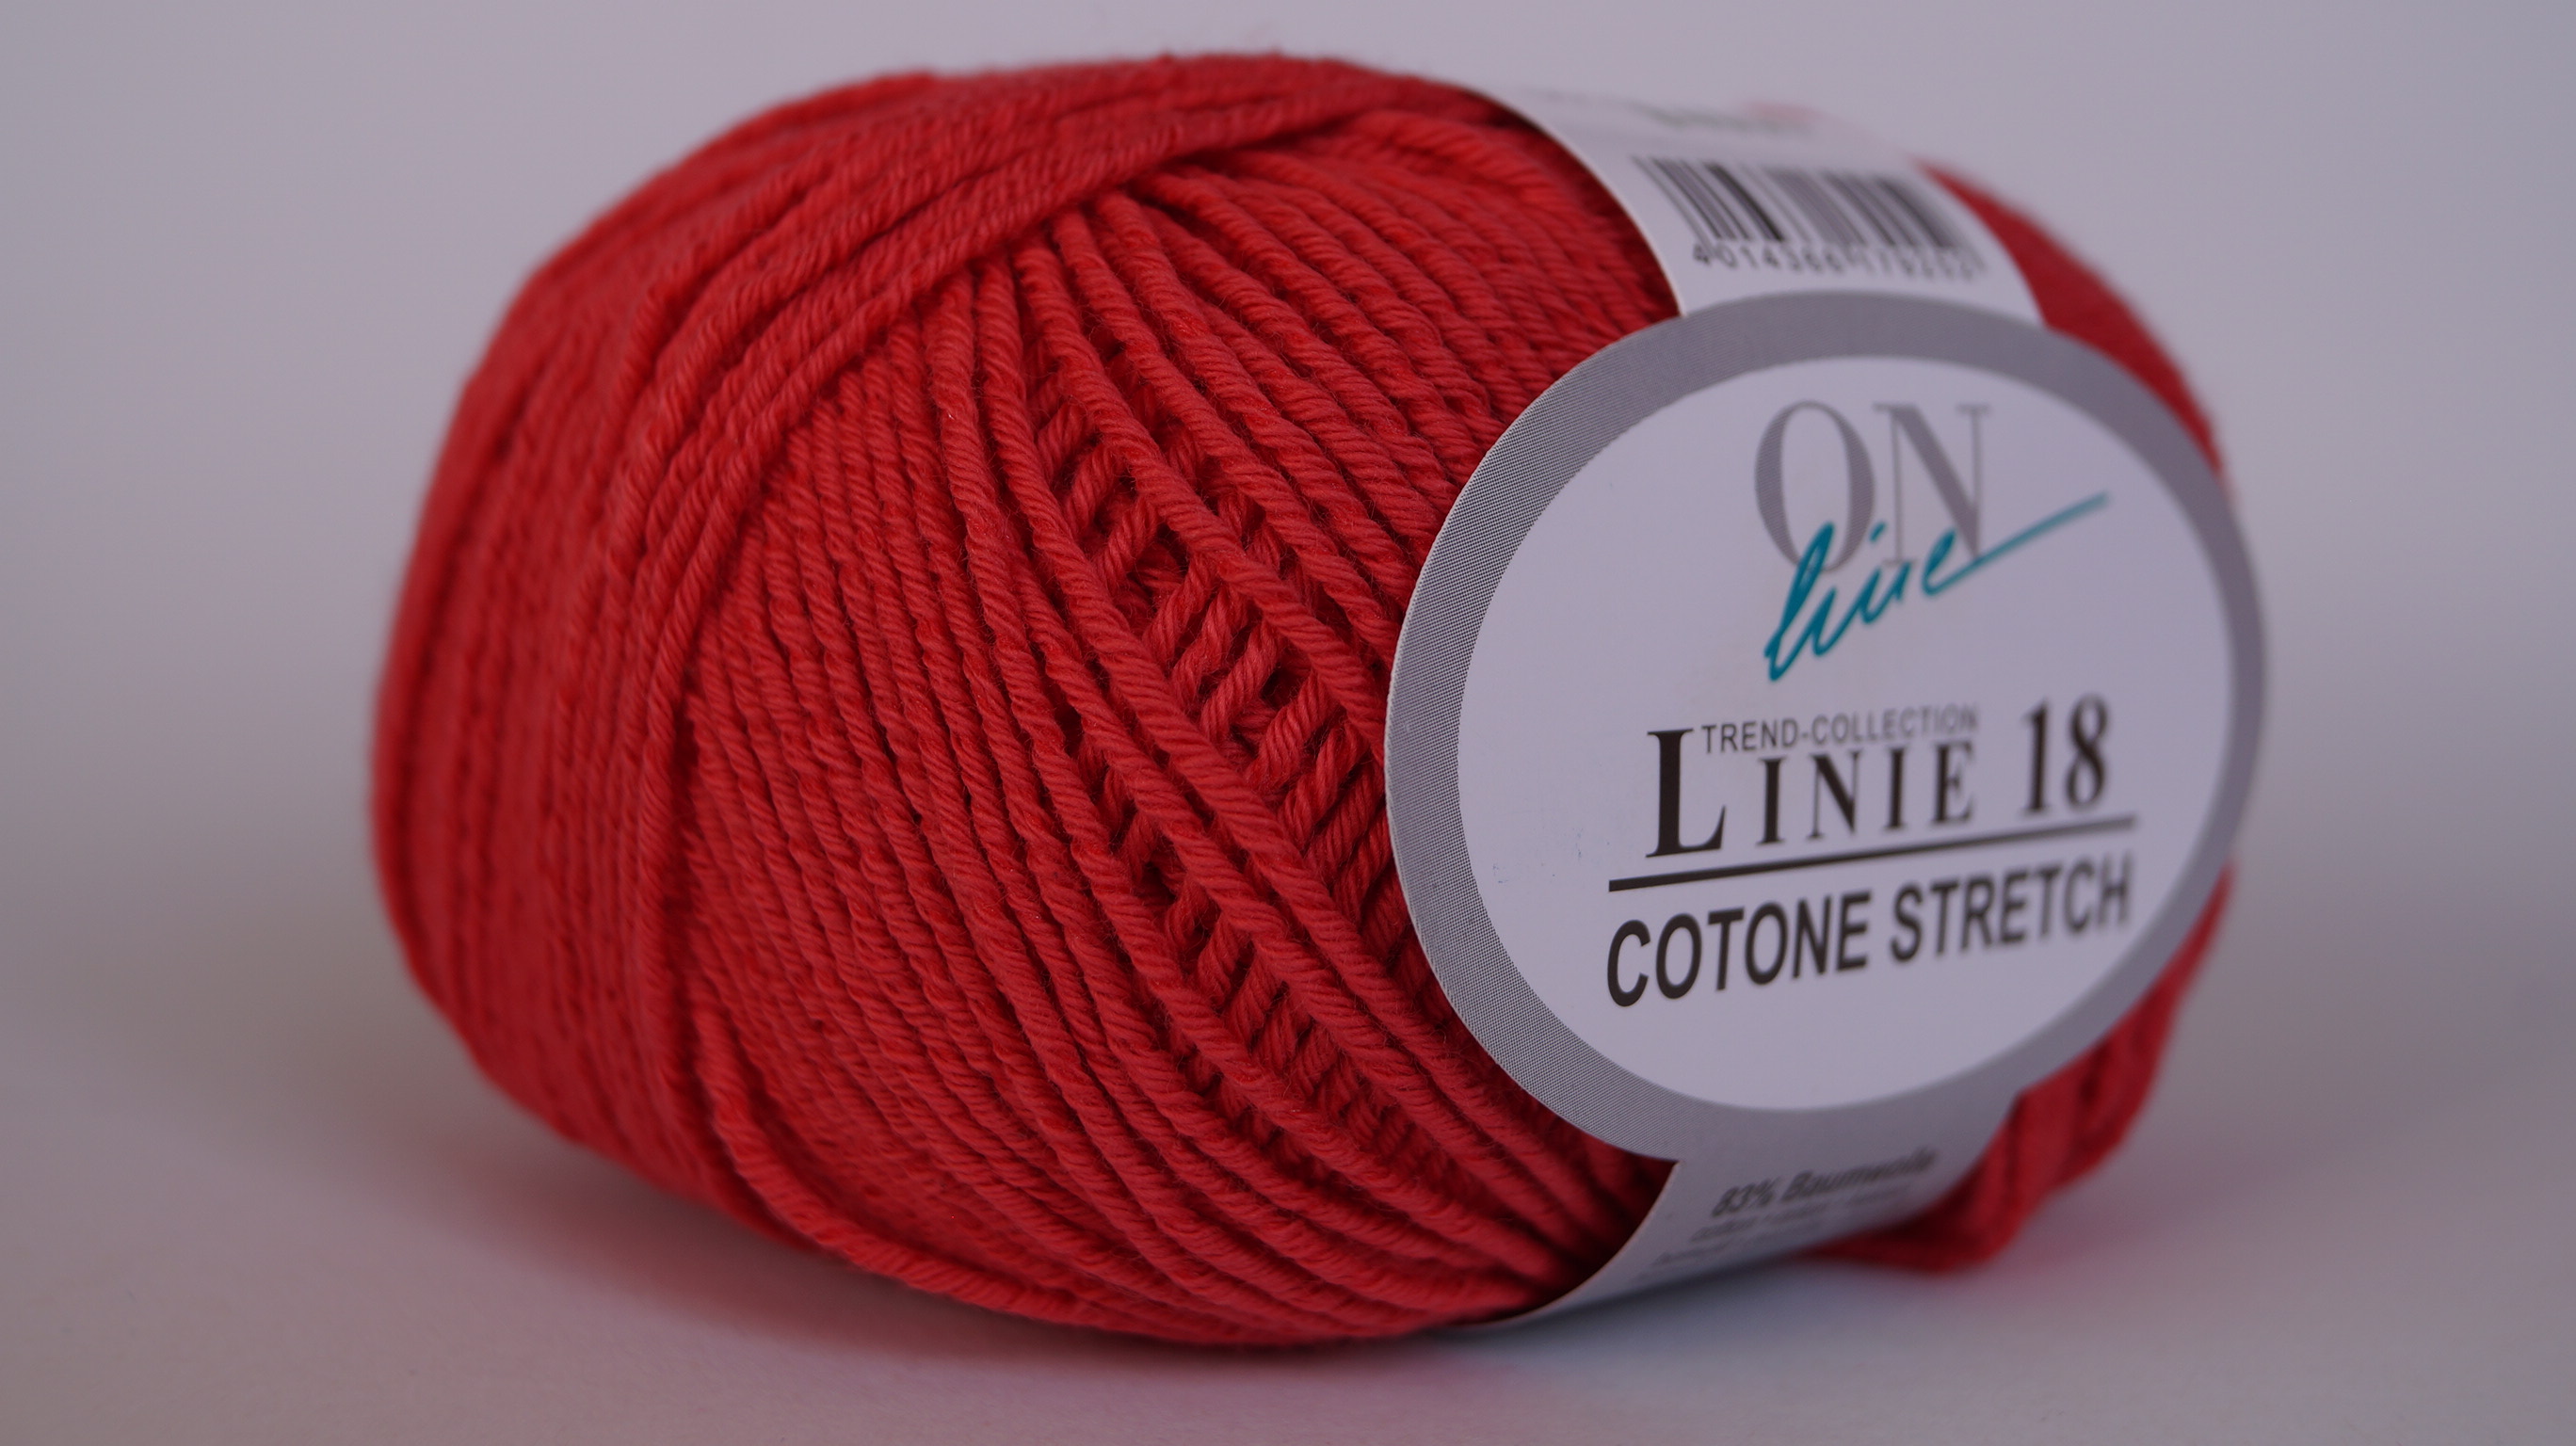 Linie 18 Cotone Stretch